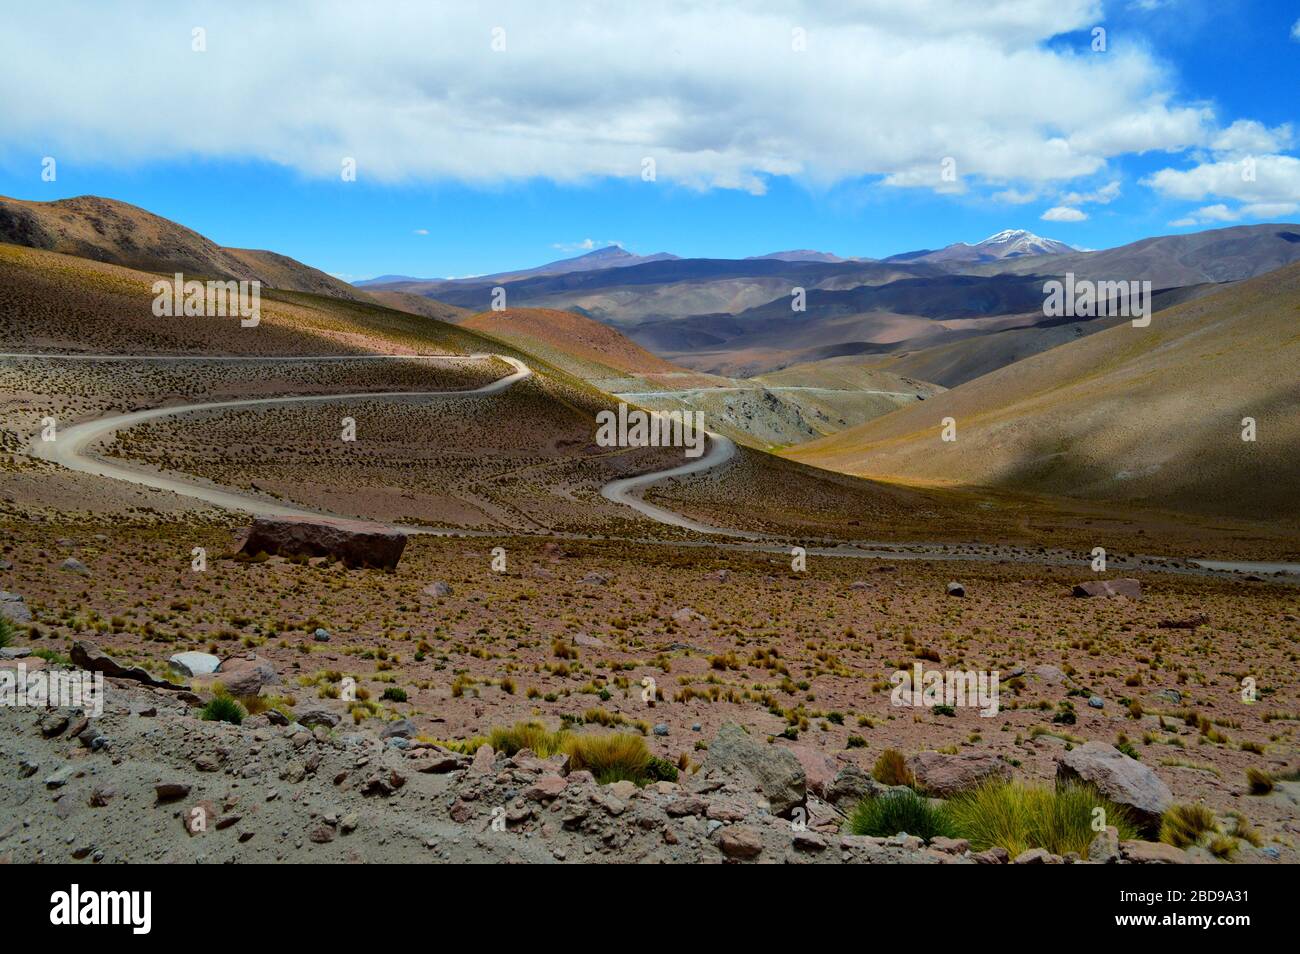 Abstieg nach Santa Rosa de los Pastos Grandes. Der Vulkan Quevar ist rechts zu sehen. Salta, Argentinien Stockfoto